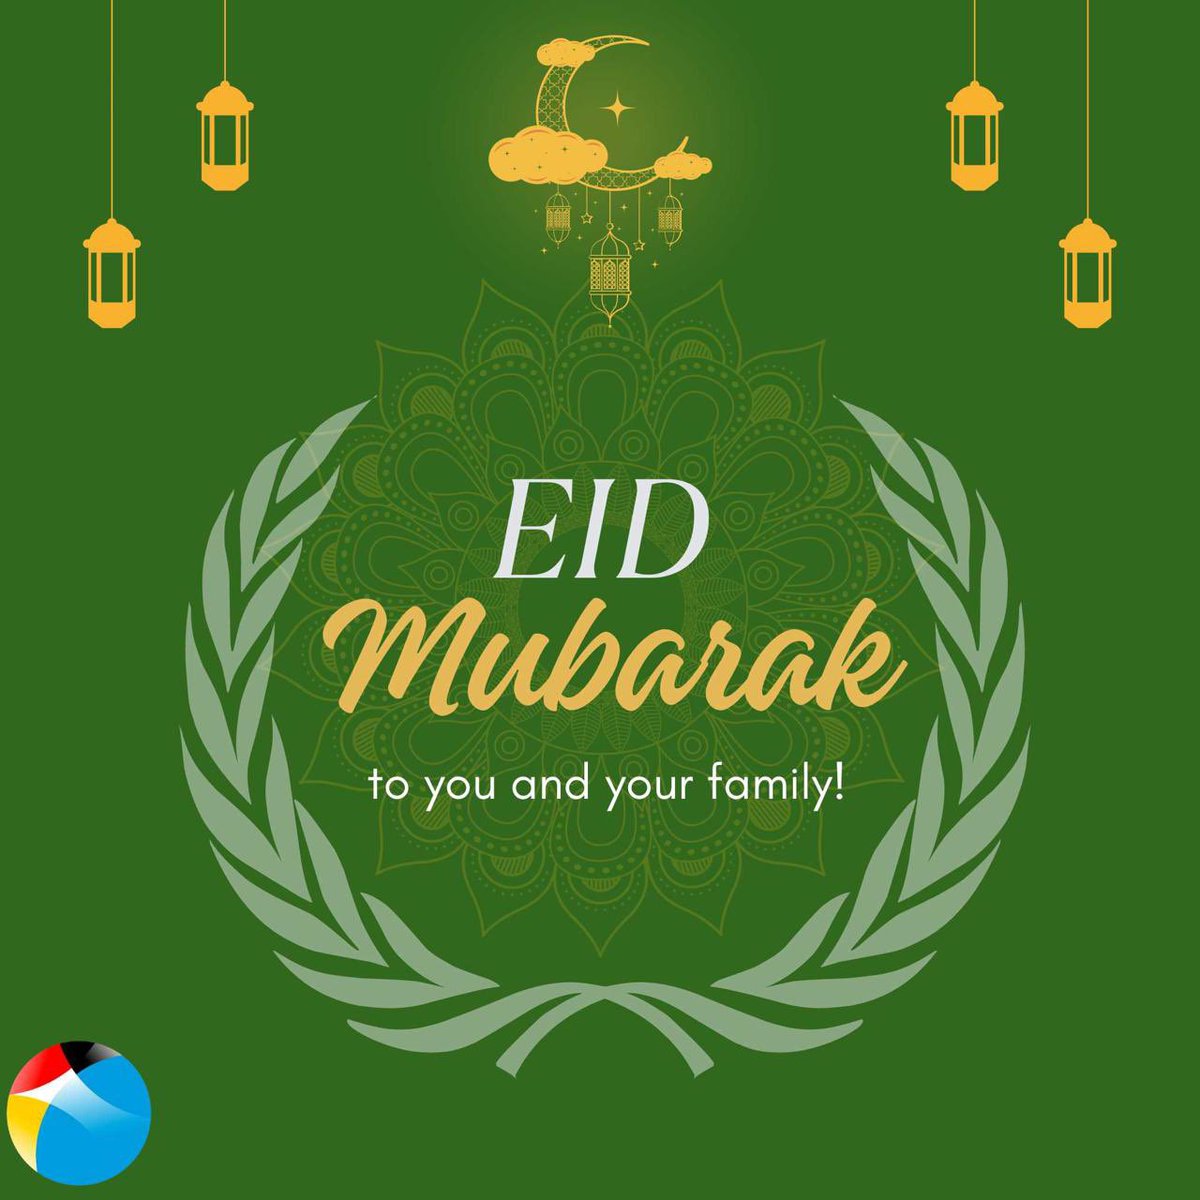 Today marks the end of #Ramadan in #Kenya 🇰🇪🌙 We wish all Muslims in Kenya and around the world a happy #EidAlFitr. Eid Mubarak!